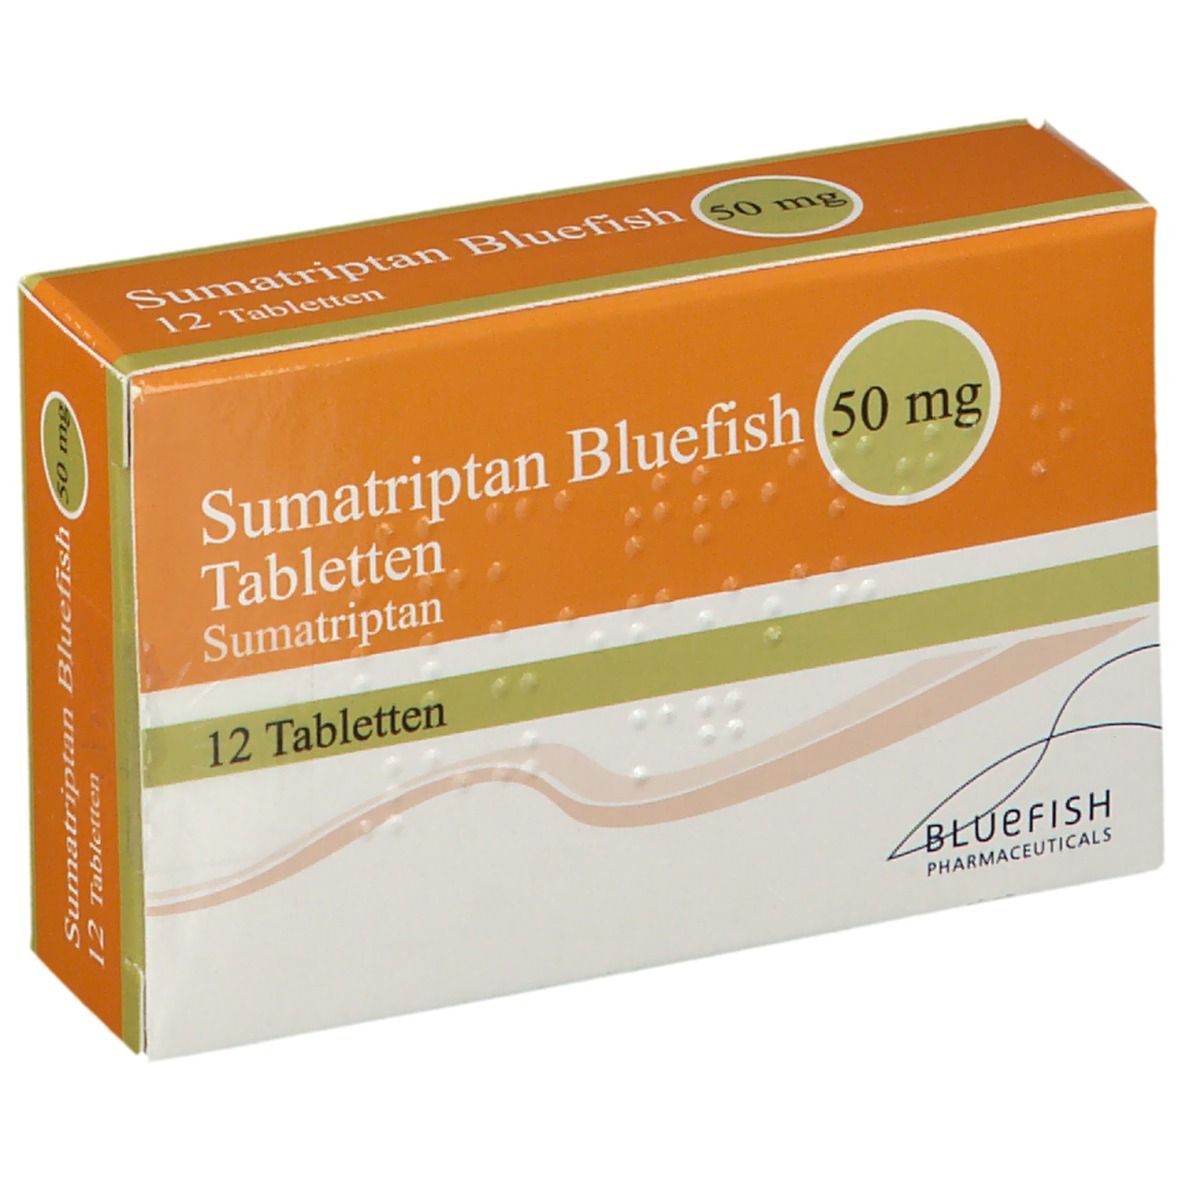 Sumatriptan Bluefish 50 mg